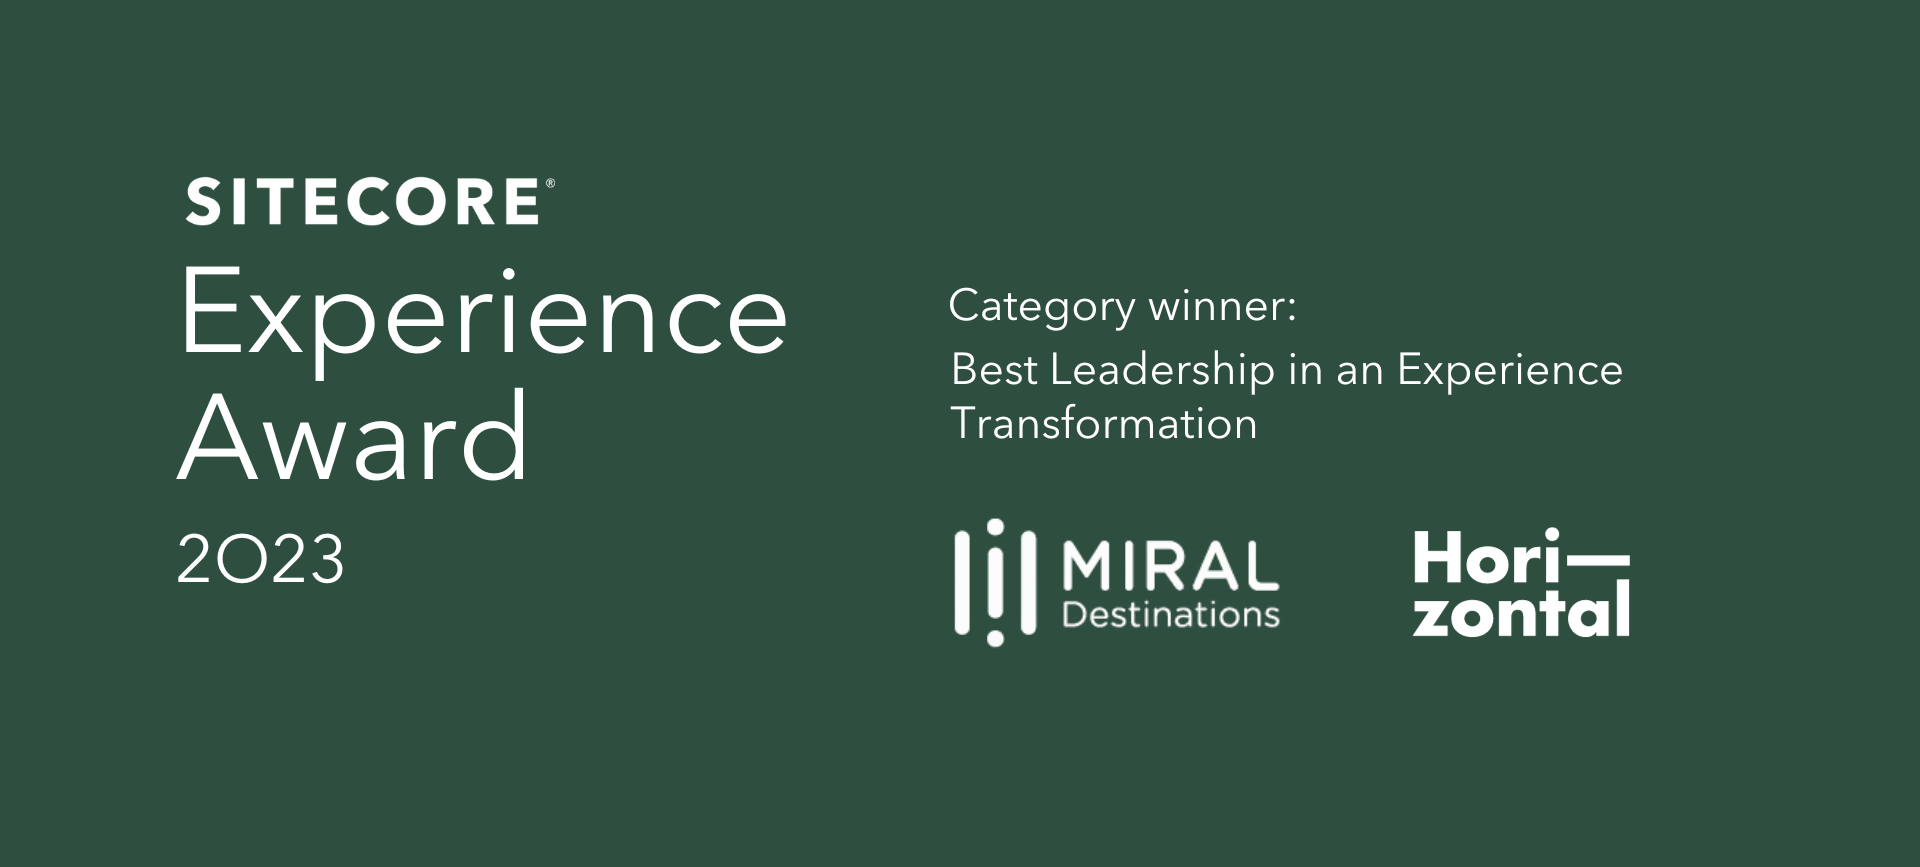 Horizontal Digital Wins 2023 Sitecore Experience Award for Judges’ Choice in EMEA Region